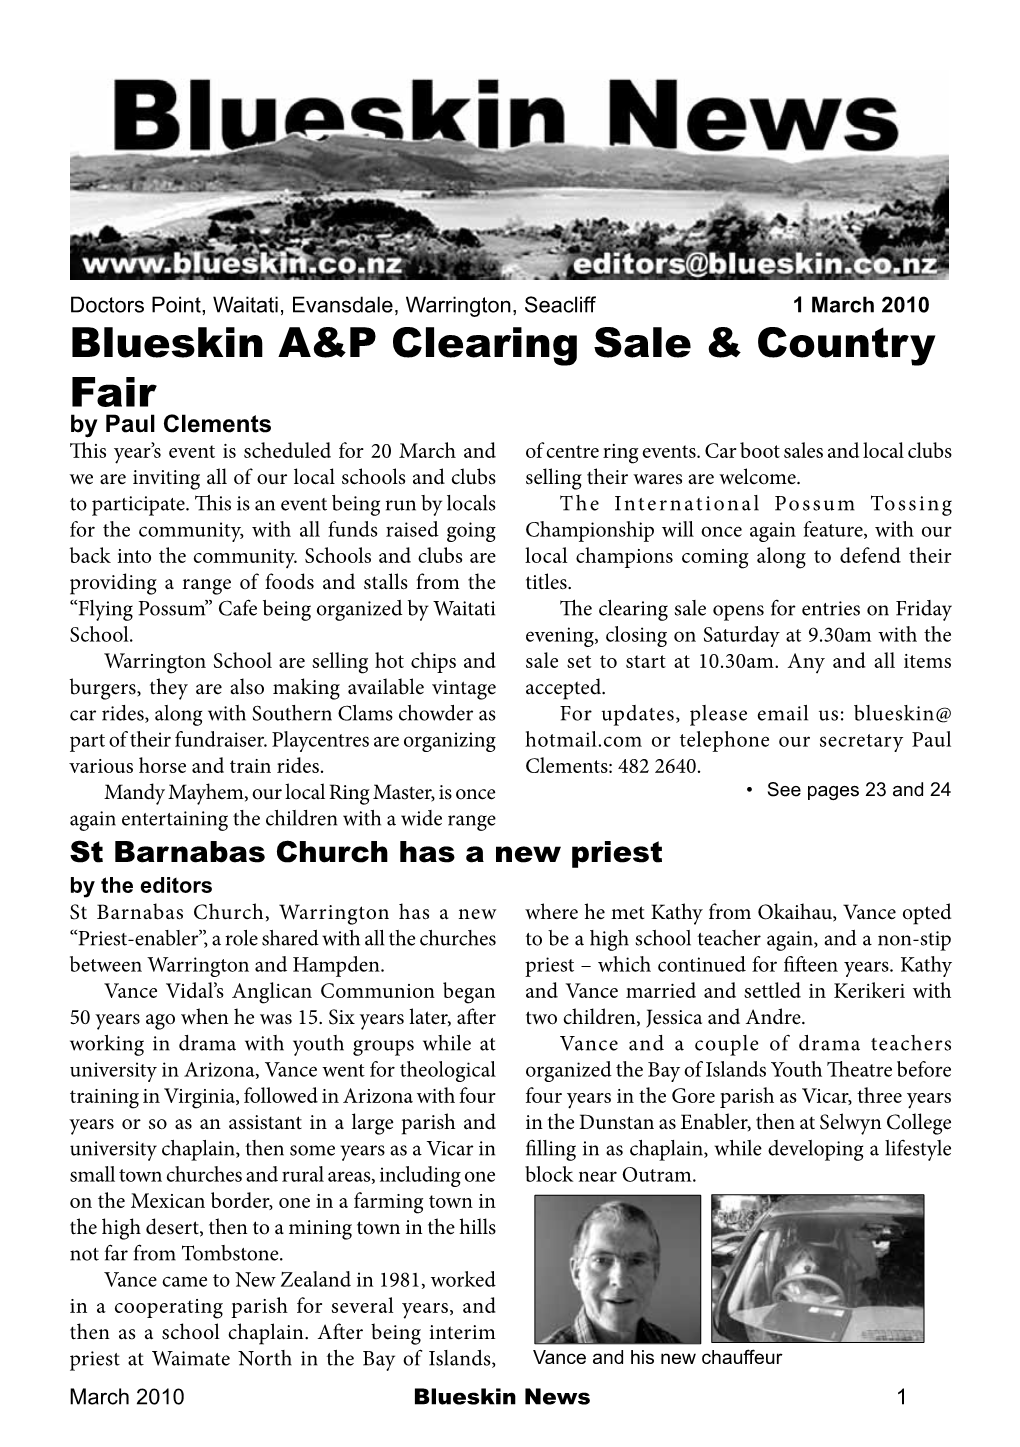 Blueskin A&P Clearing Sale & Country Fair